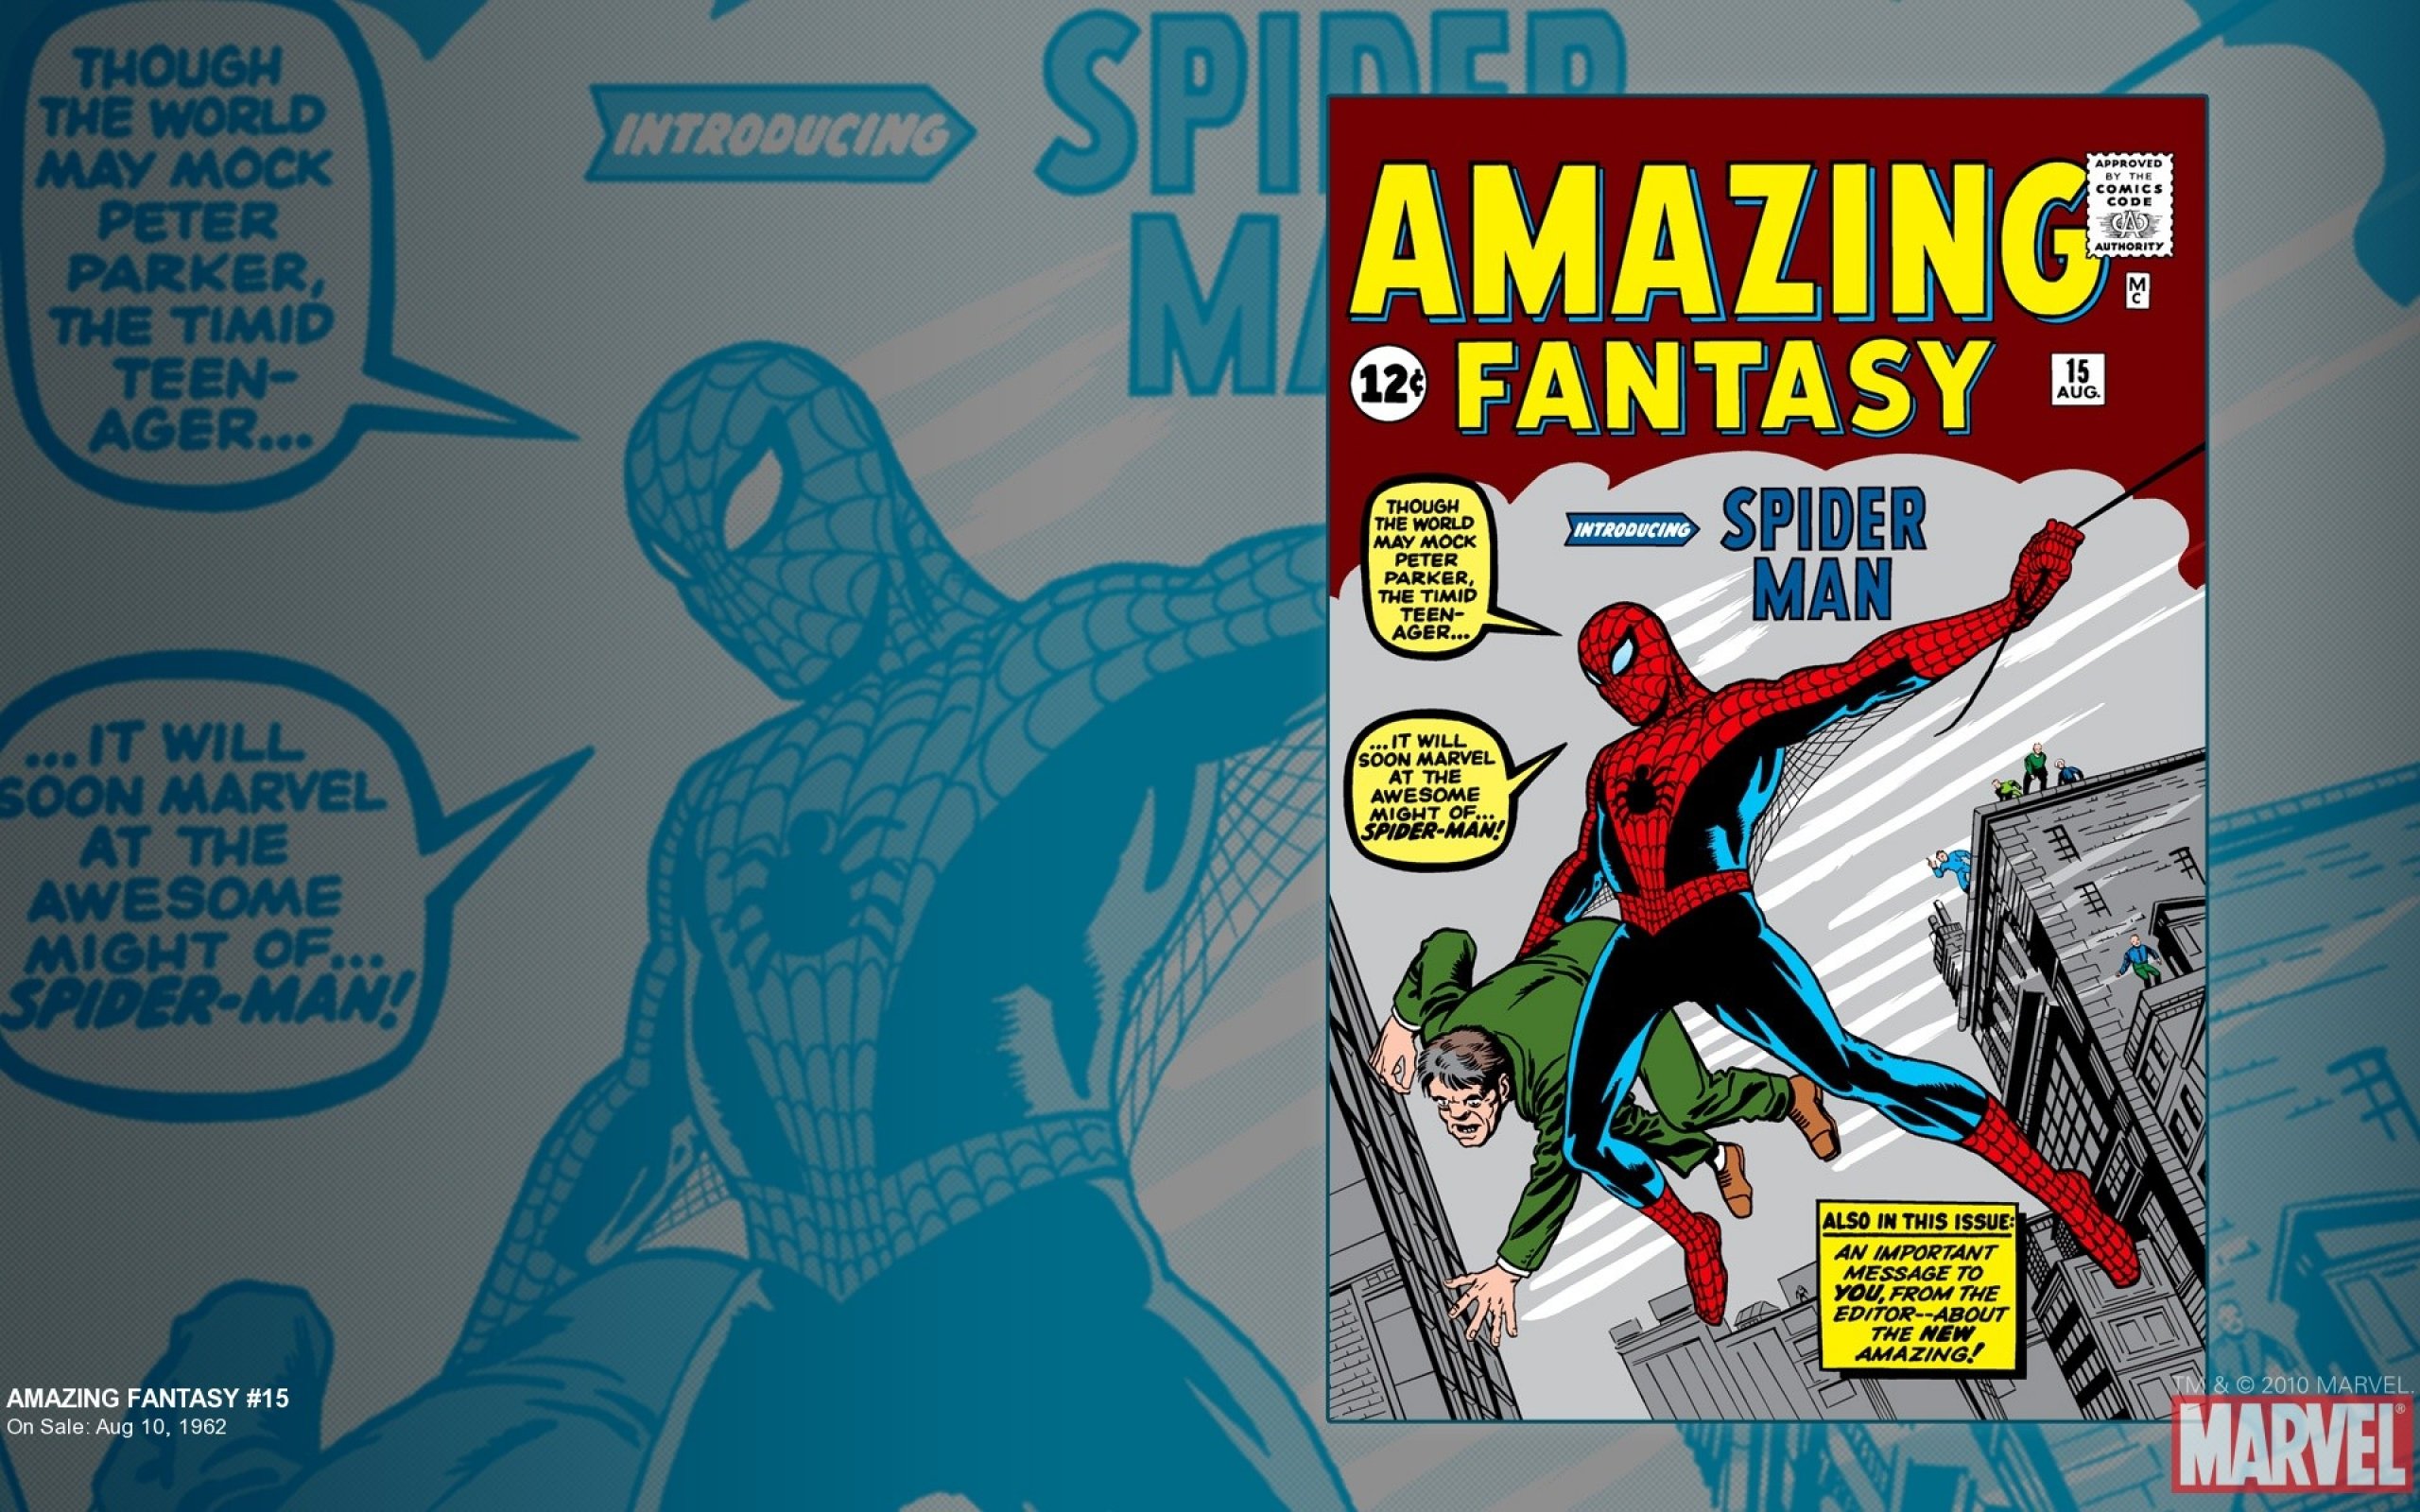 spider man, Superhero, Marvel, Spider, Man, Action, Spiderman, Poster Wallpaper